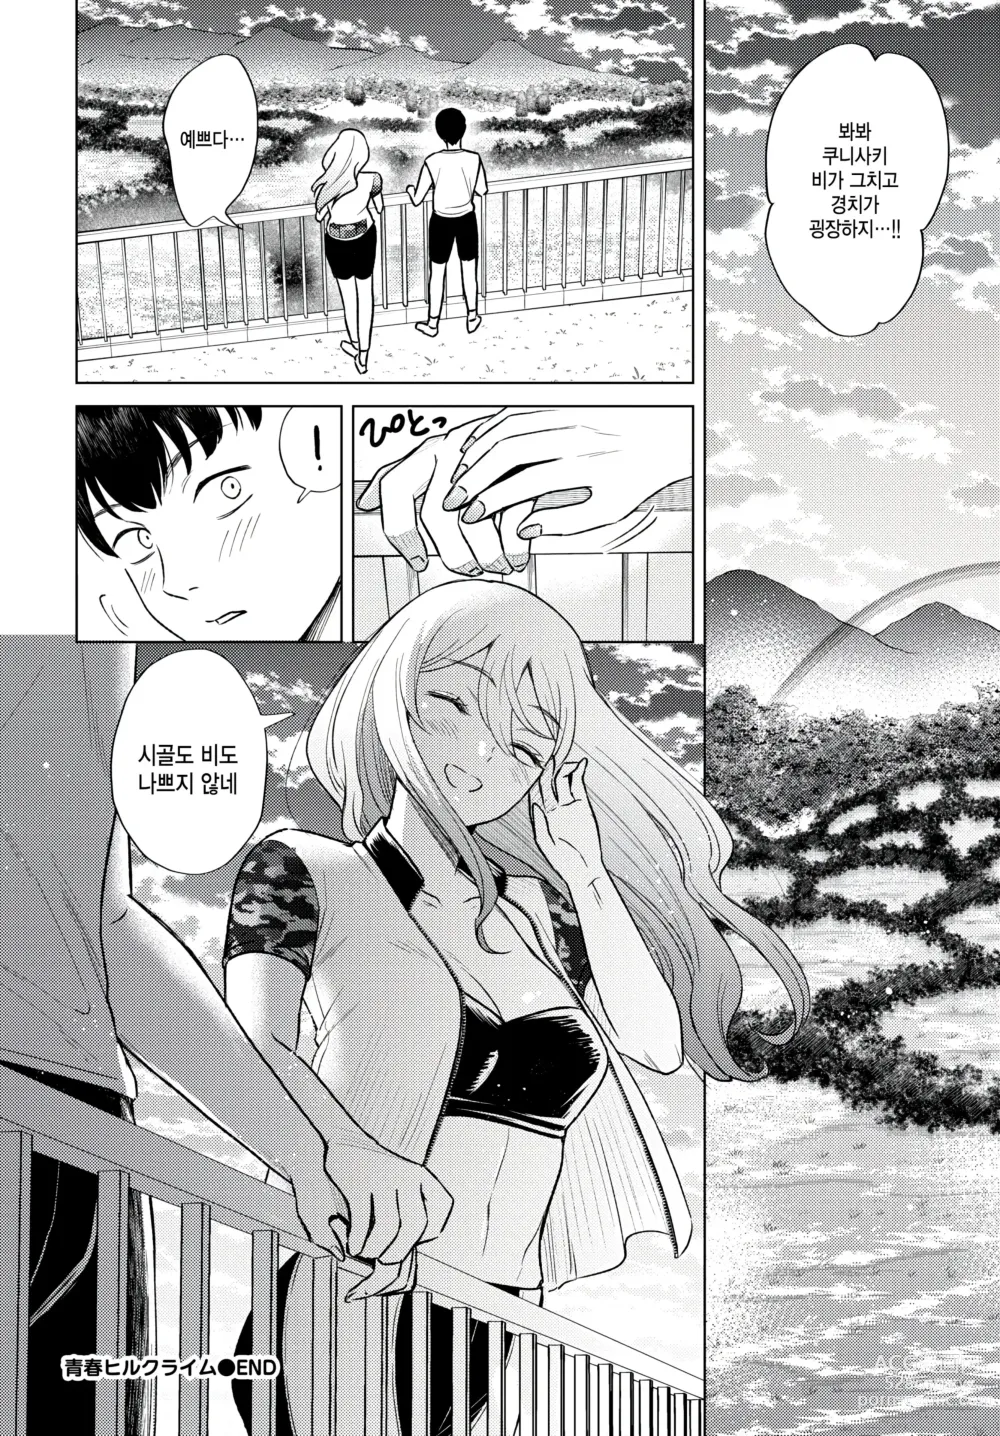 Page 20 of manga Seishun Hill Climb